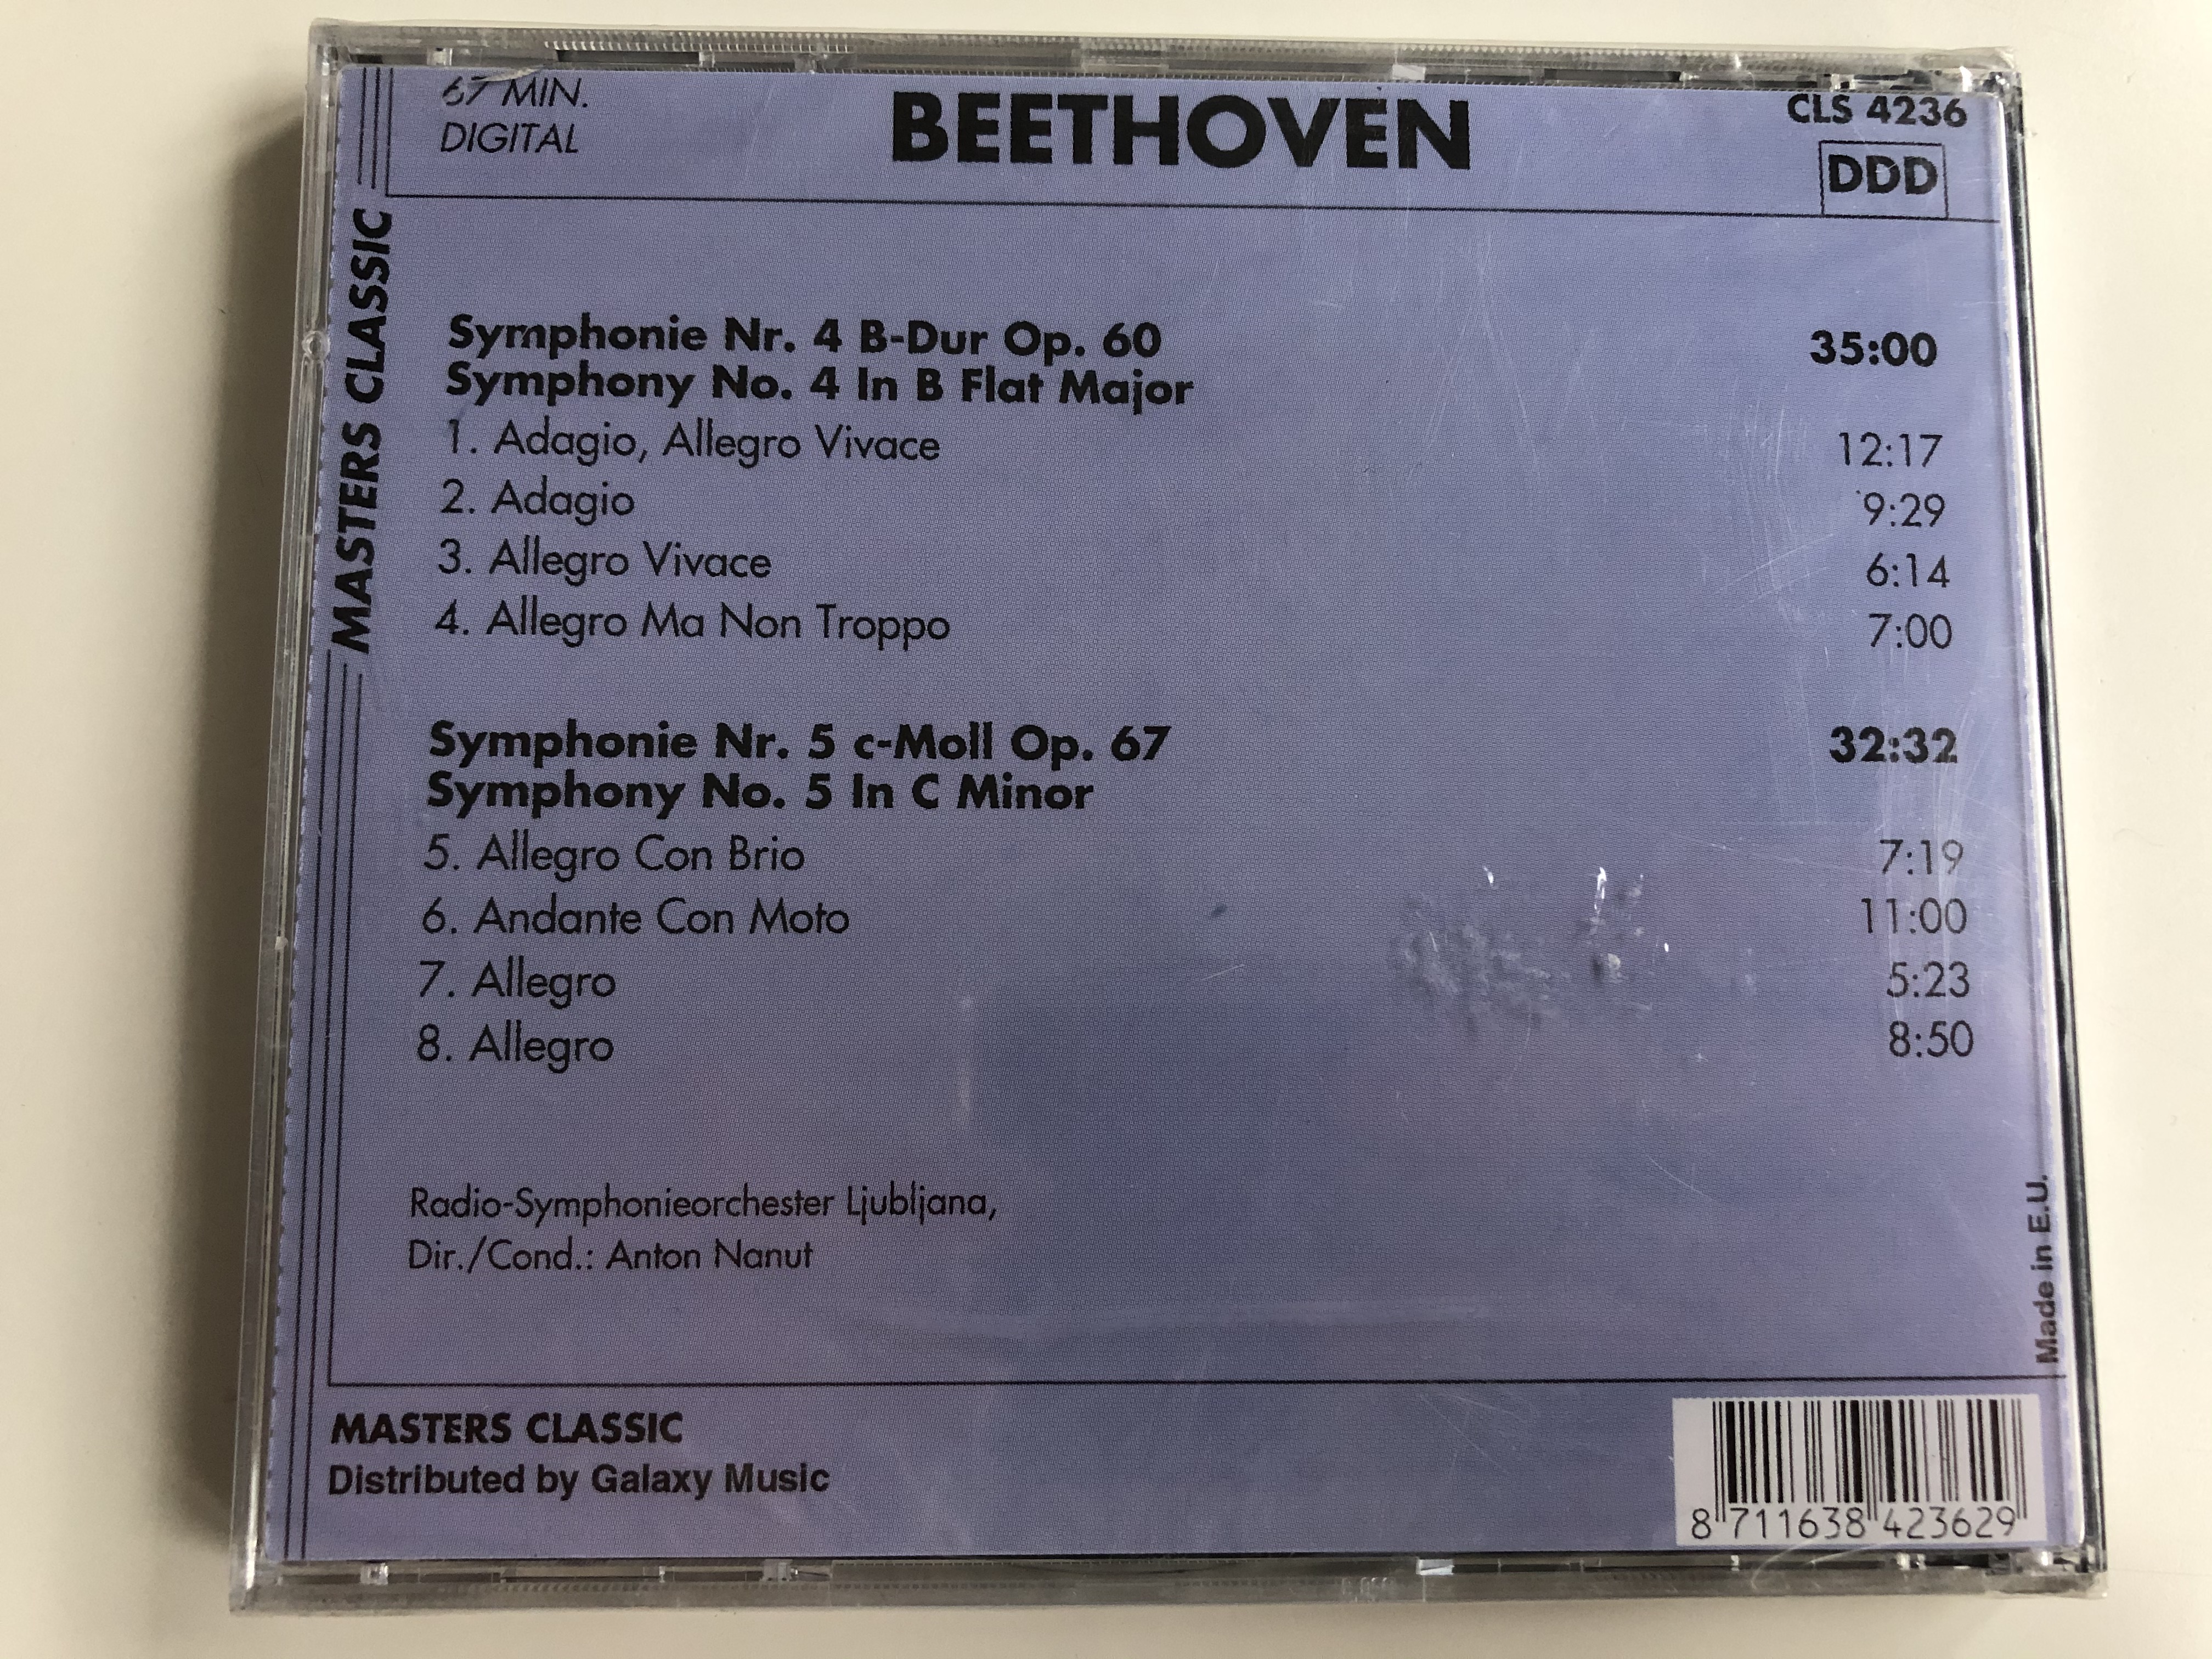 beethoven-symphonie-nr.-4-symphonie-nr.-5-symphony-no.-4-symphony-no.-5-radio-symphonieorchester-ljubljana-conducted-anton-nanut-master-classic-audio-cd-cls-4236-3-.jpg